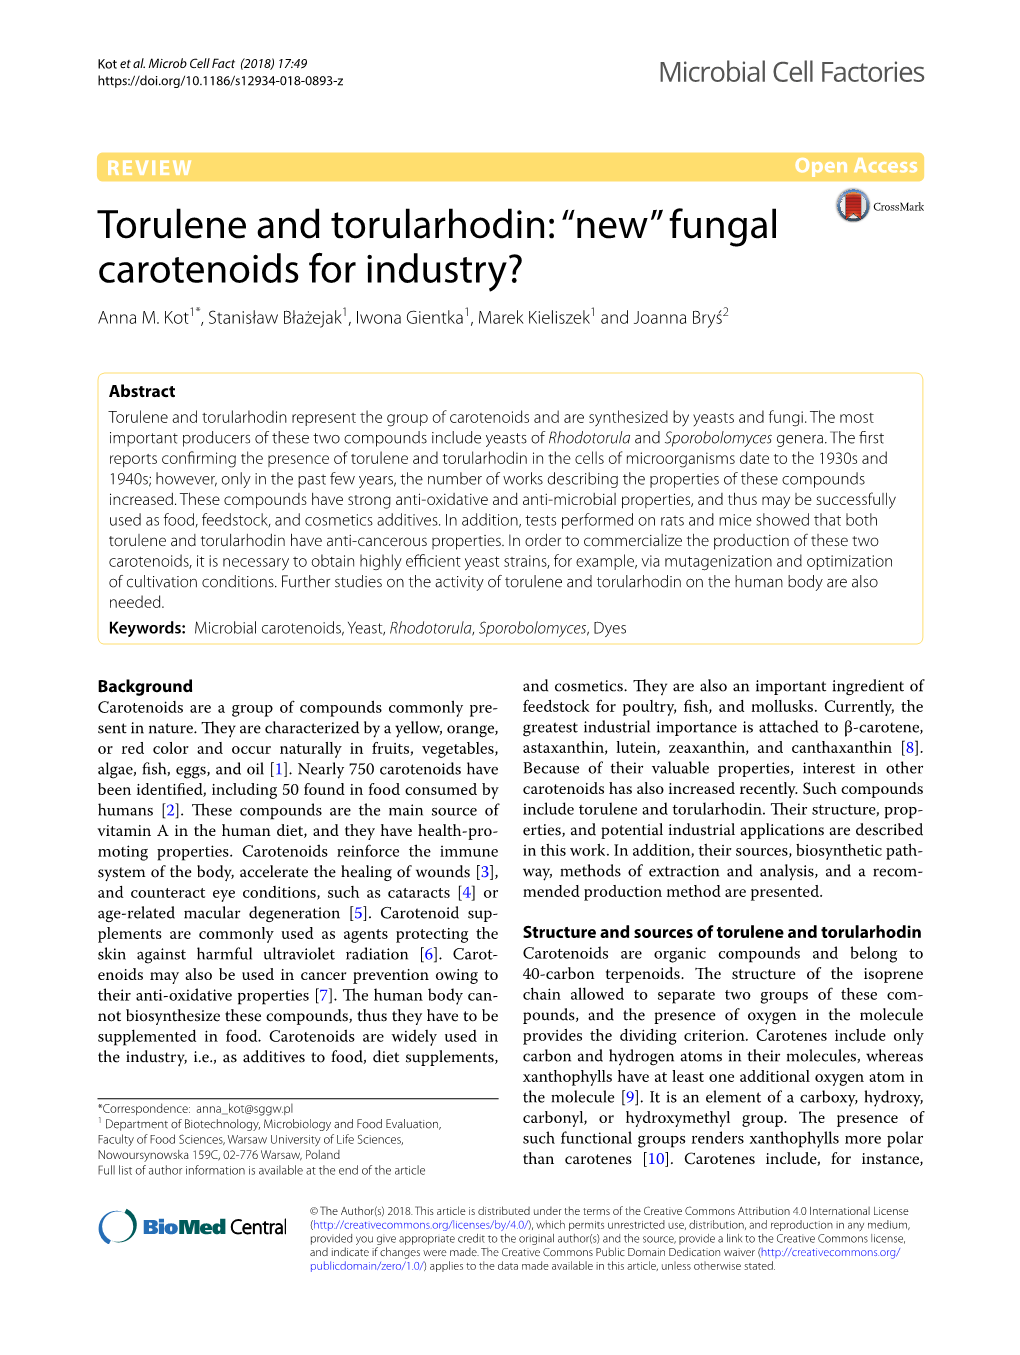 Torulene and Torularhodin: “New” Fungal Carotenoids for Industry? Anna M